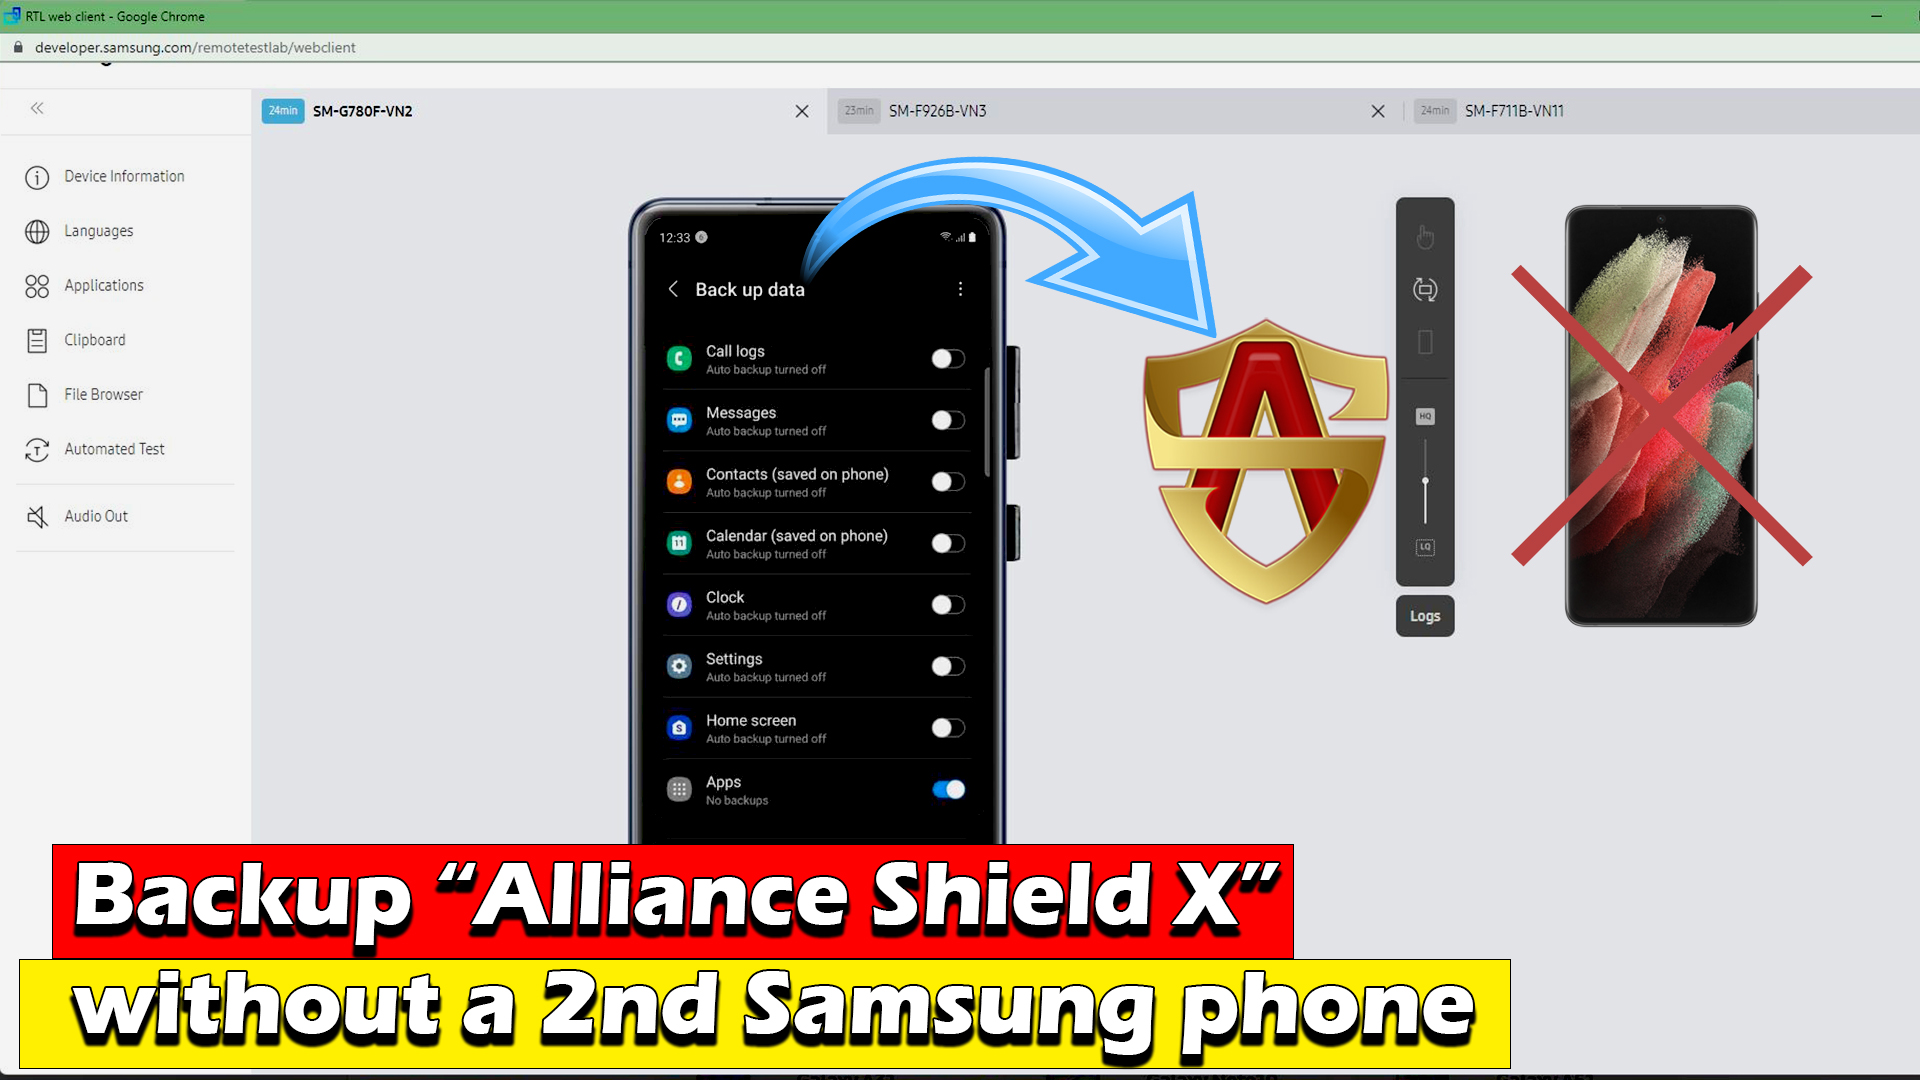 Alliance shield X - Samsung Members